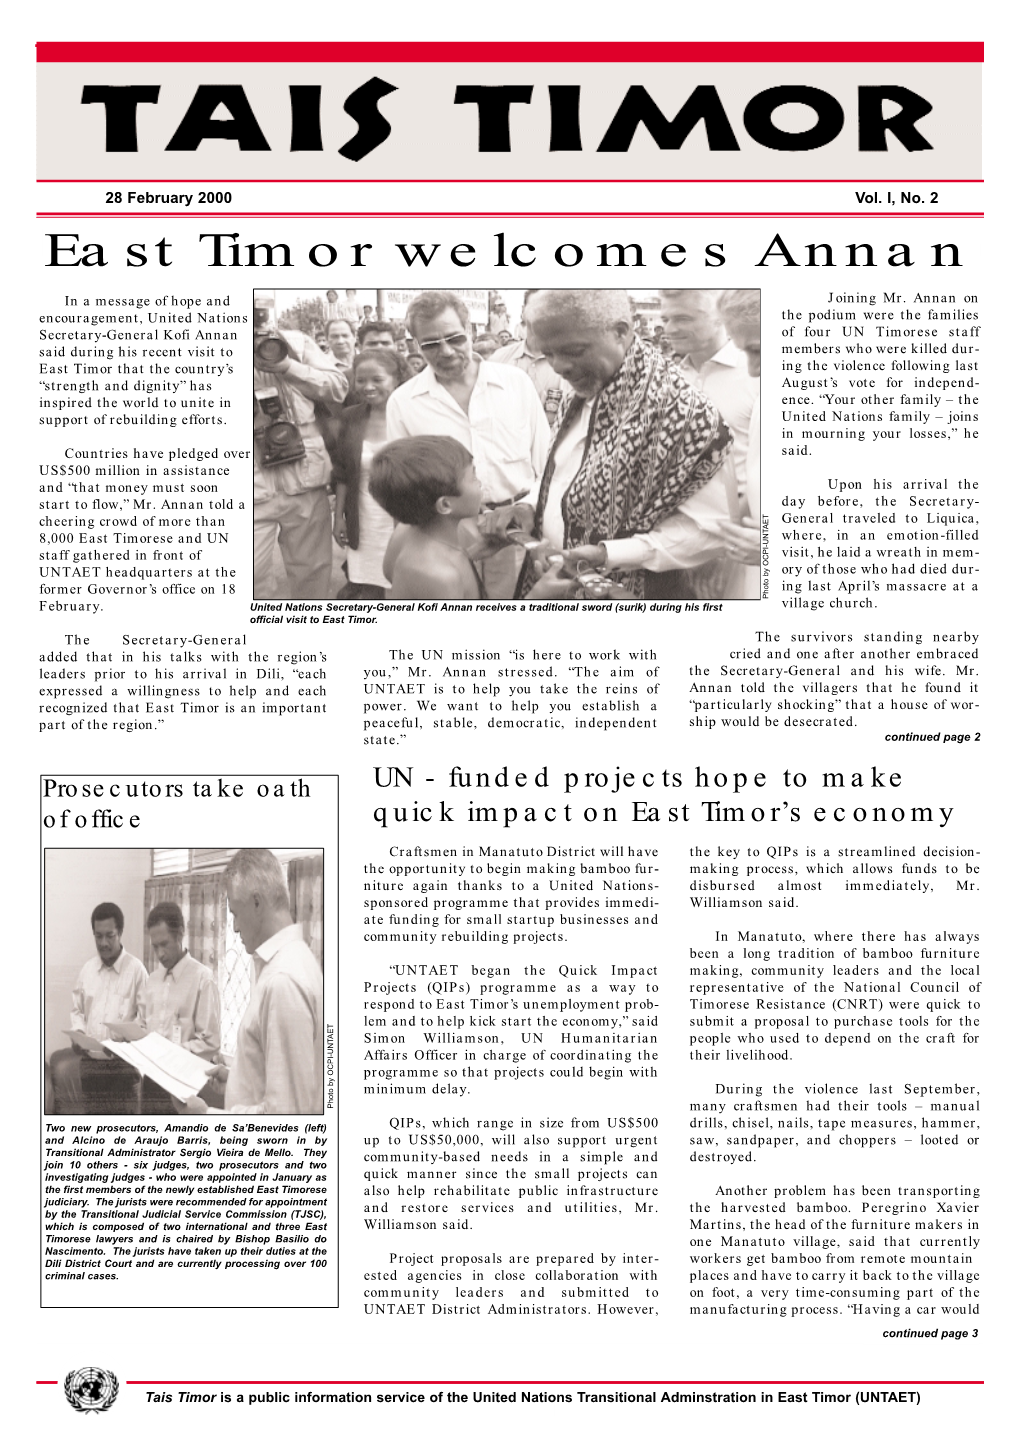 East Timor Welcomes Annan